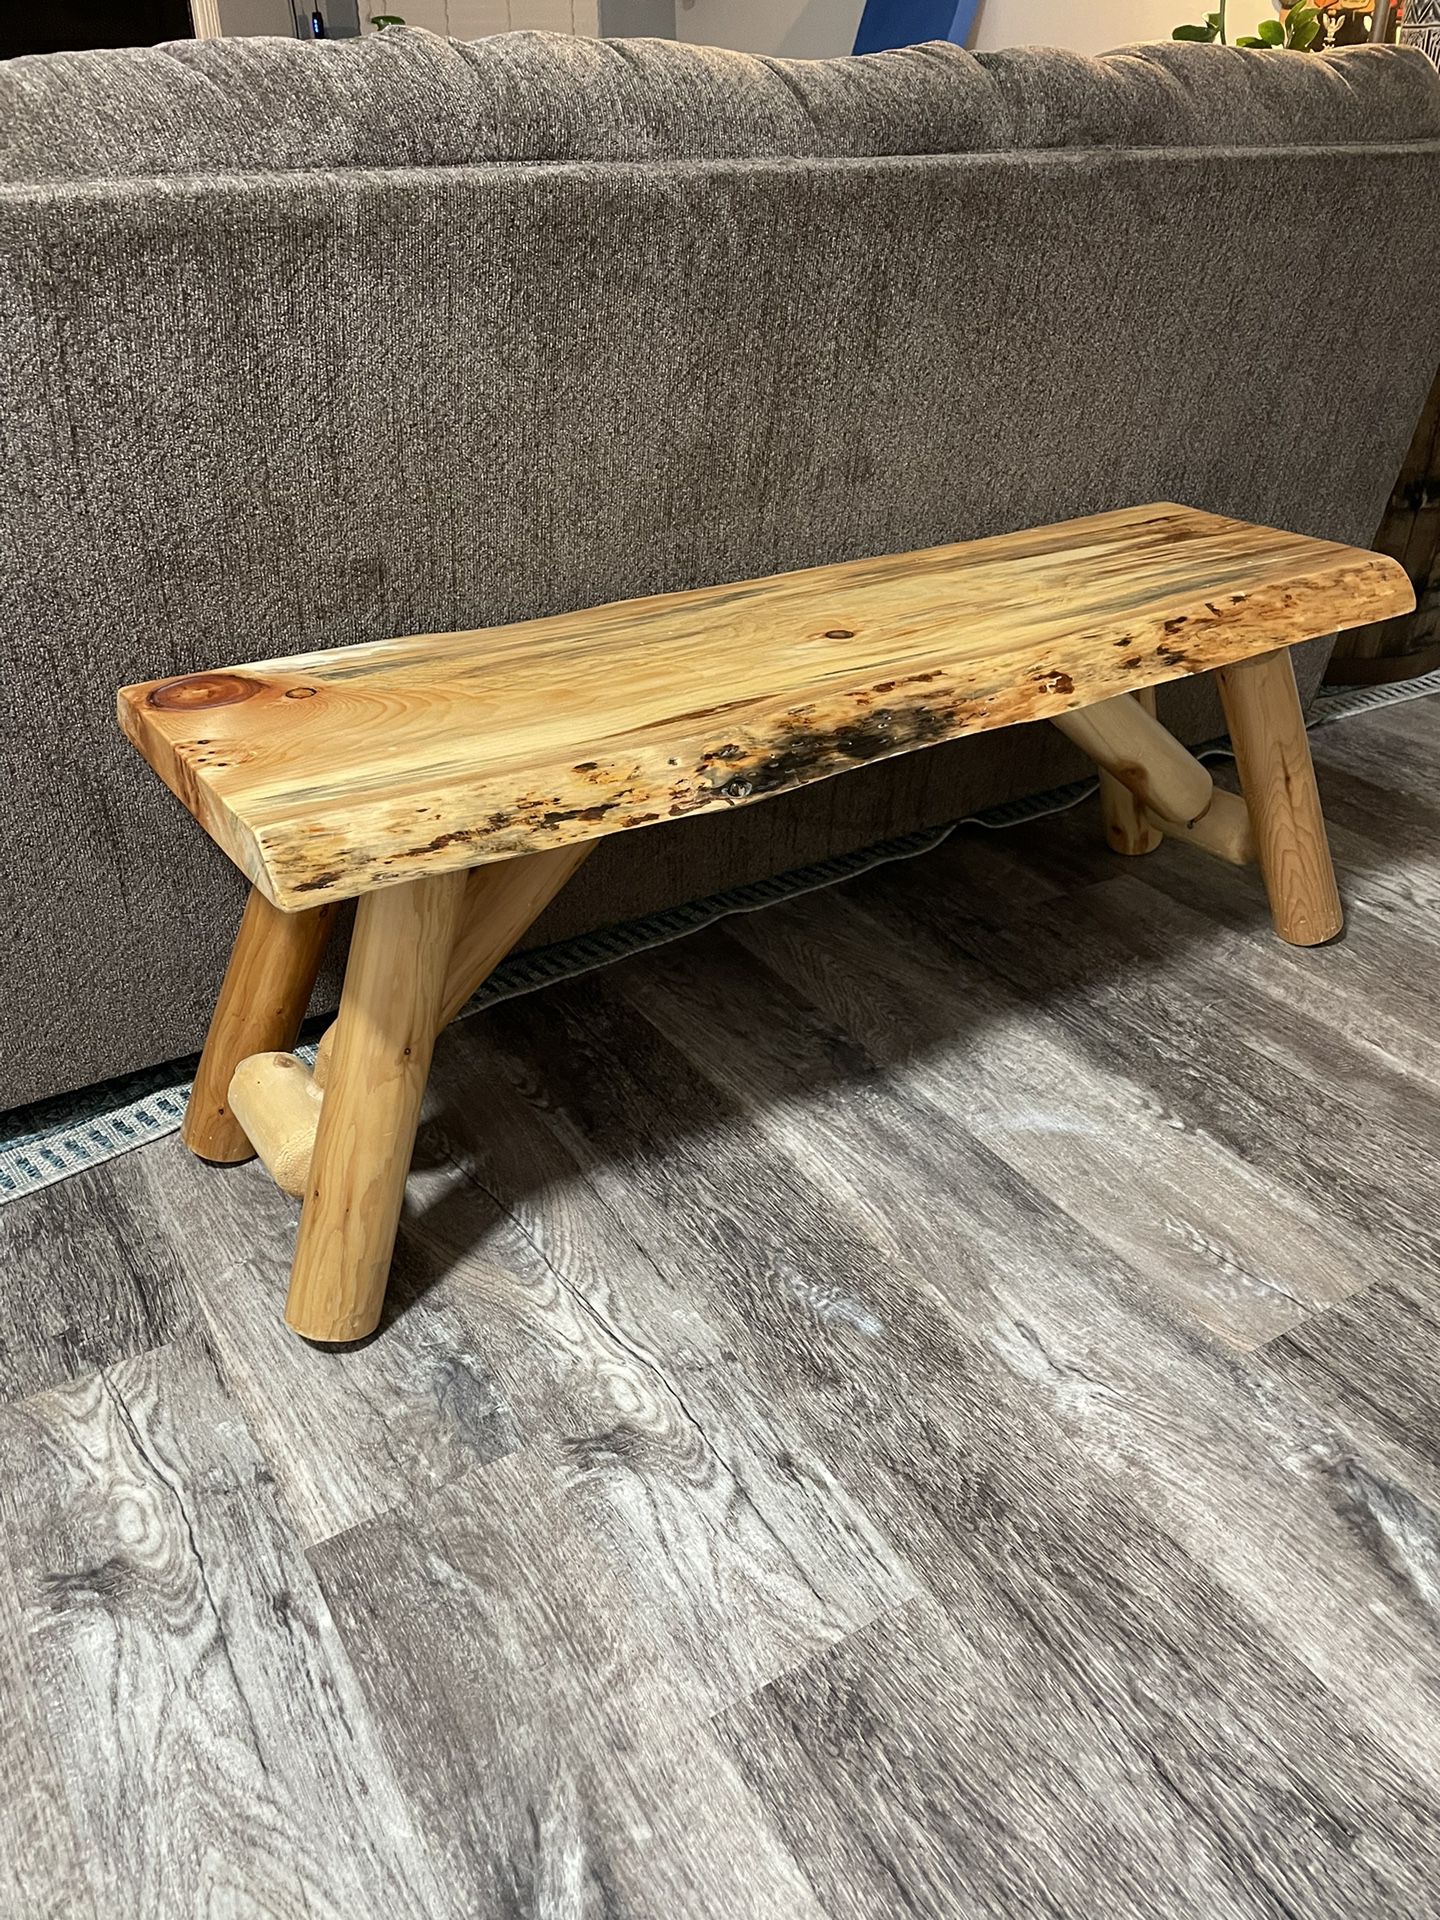 Reclaimed Raw Wood Coffee Table